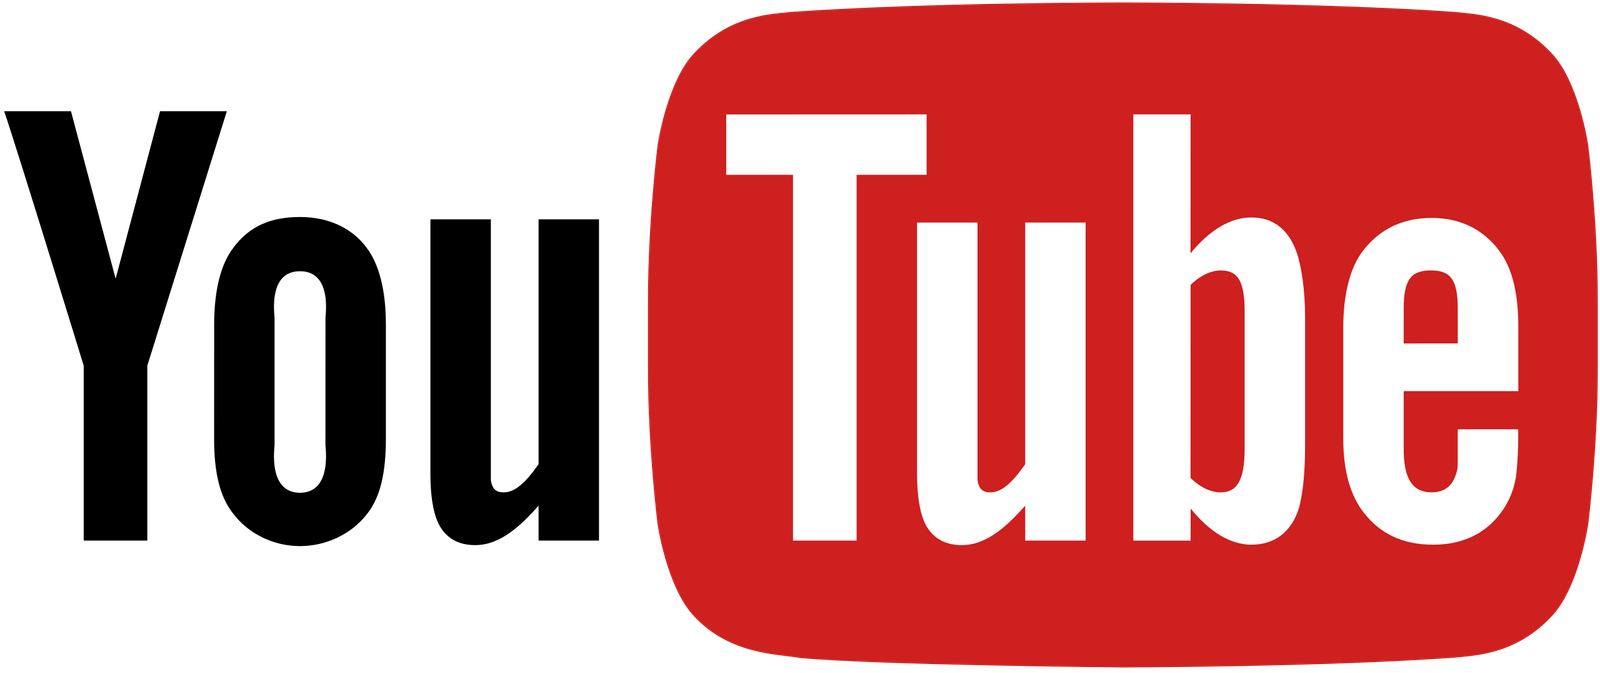 Logo of YouTube 2015 2017.svg